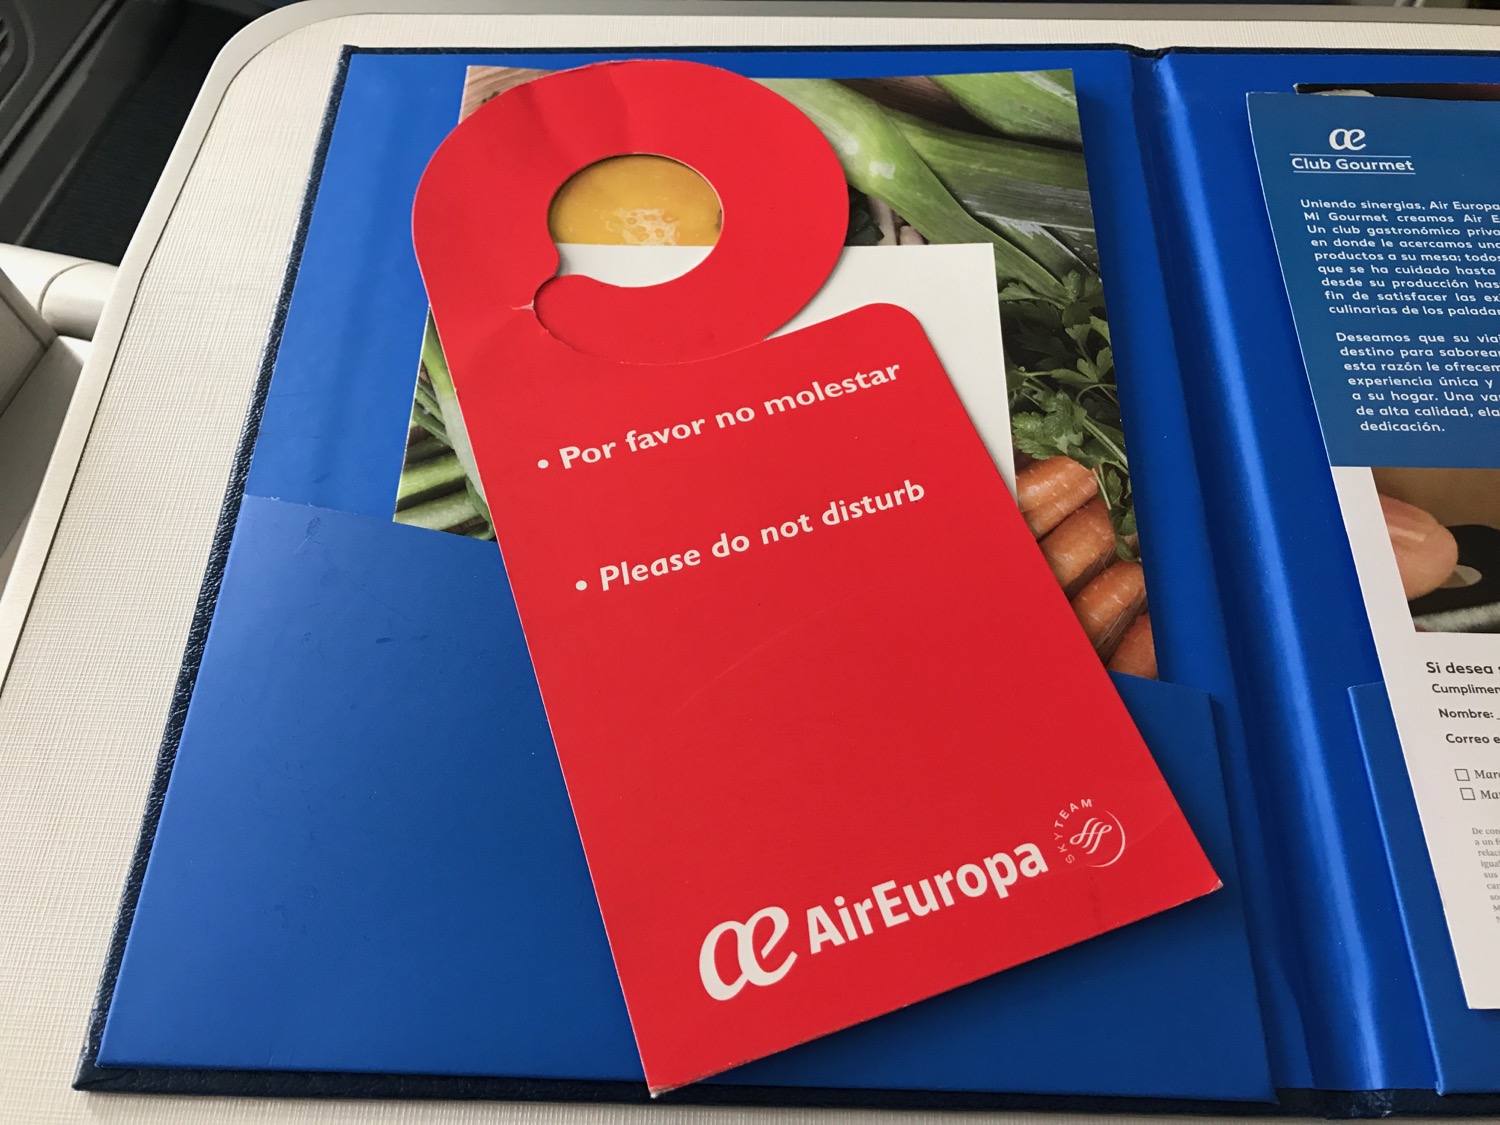 a red tag on a blue folder